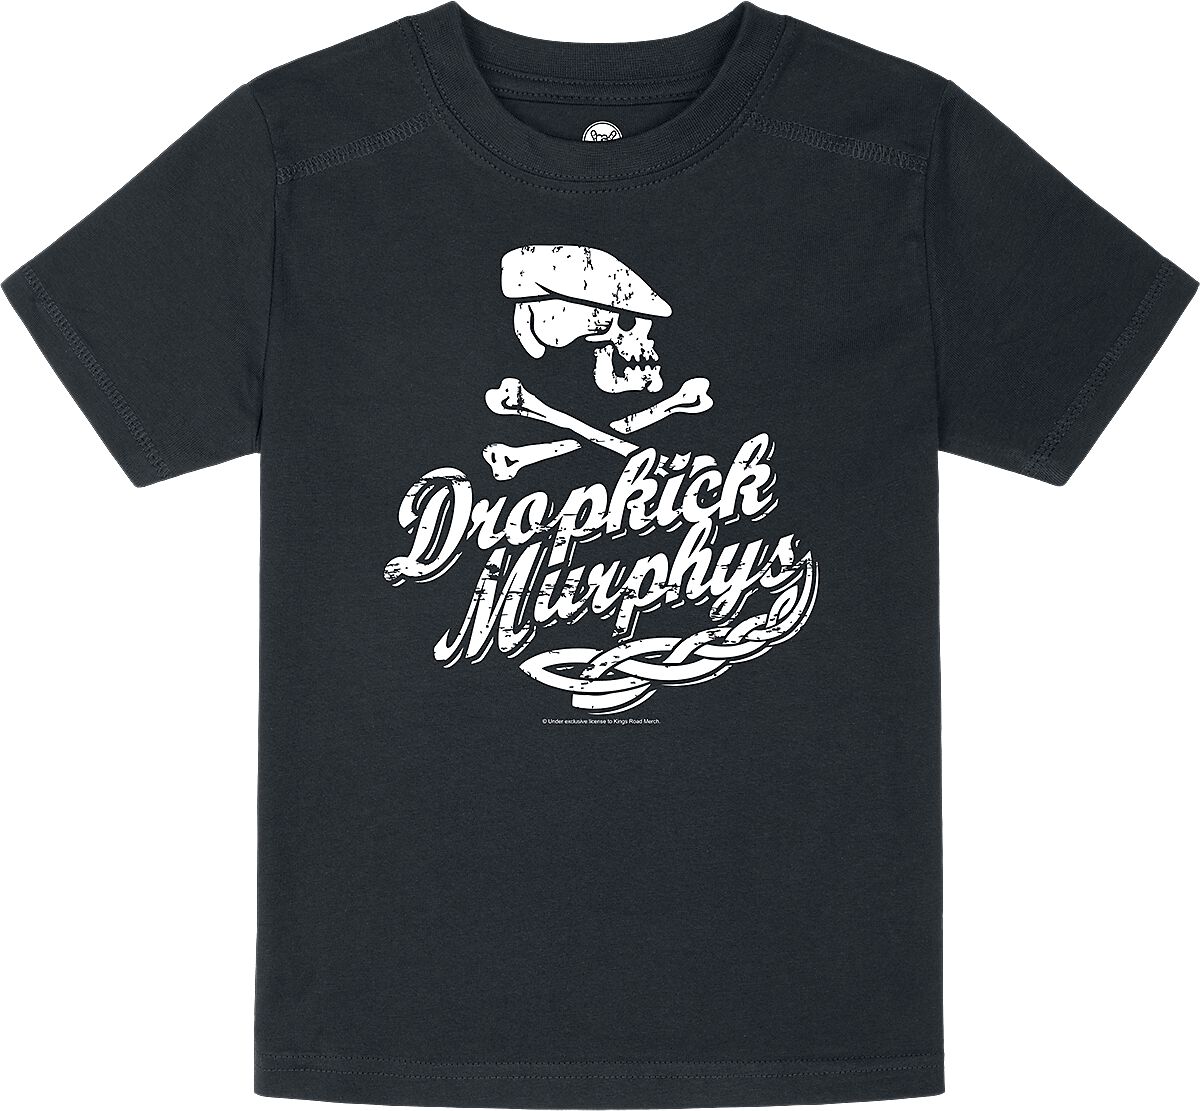 T-shirt de Dropkick Murphys - Metal-Kids - Scally Skull Ship - 92 à 164 - pour filles & garçonse - n